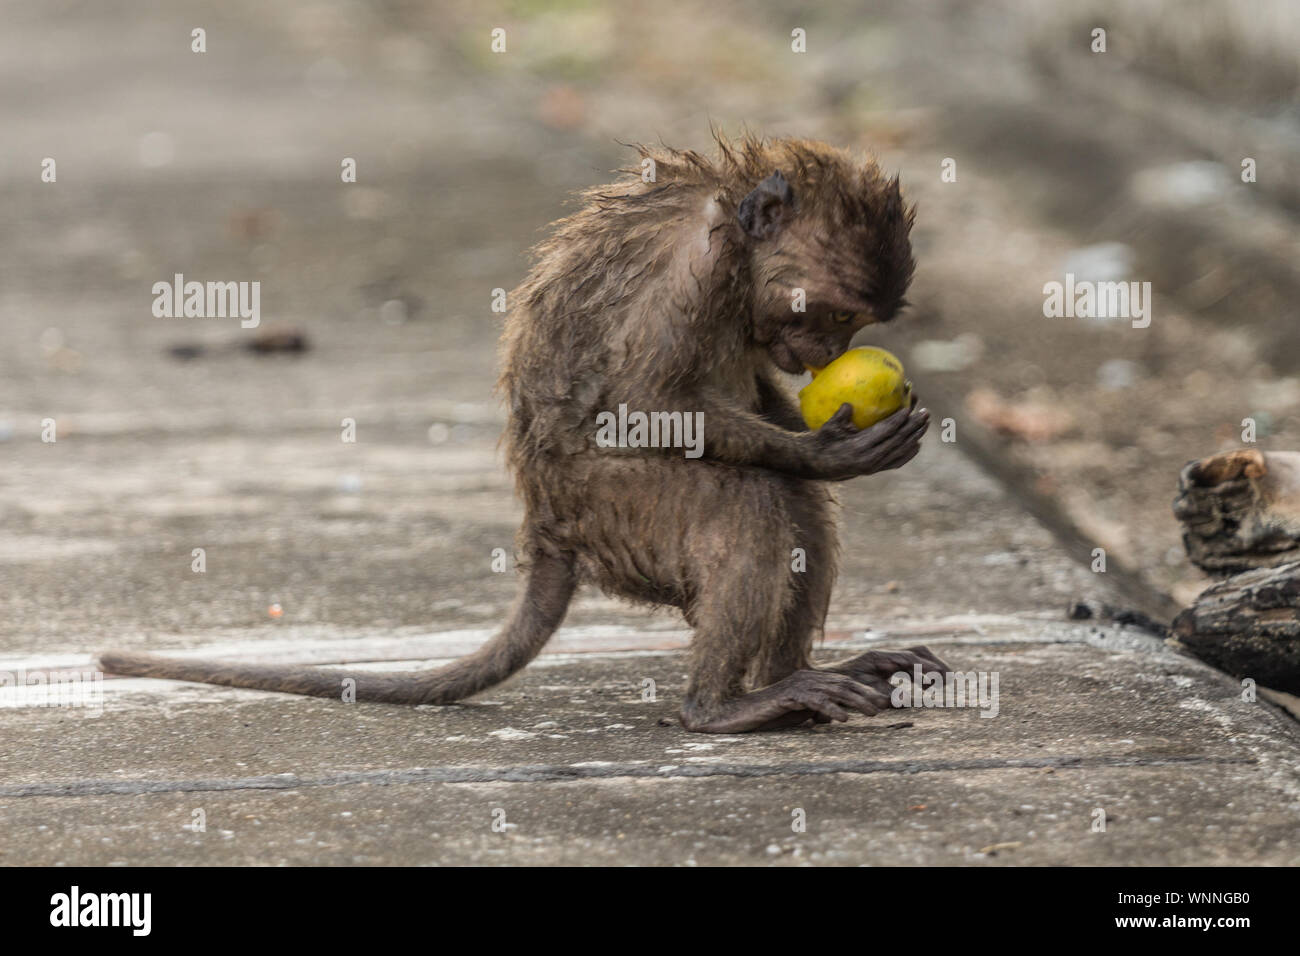 Close-up Of Monkey Eating Fruit On Footpath Stock Photo